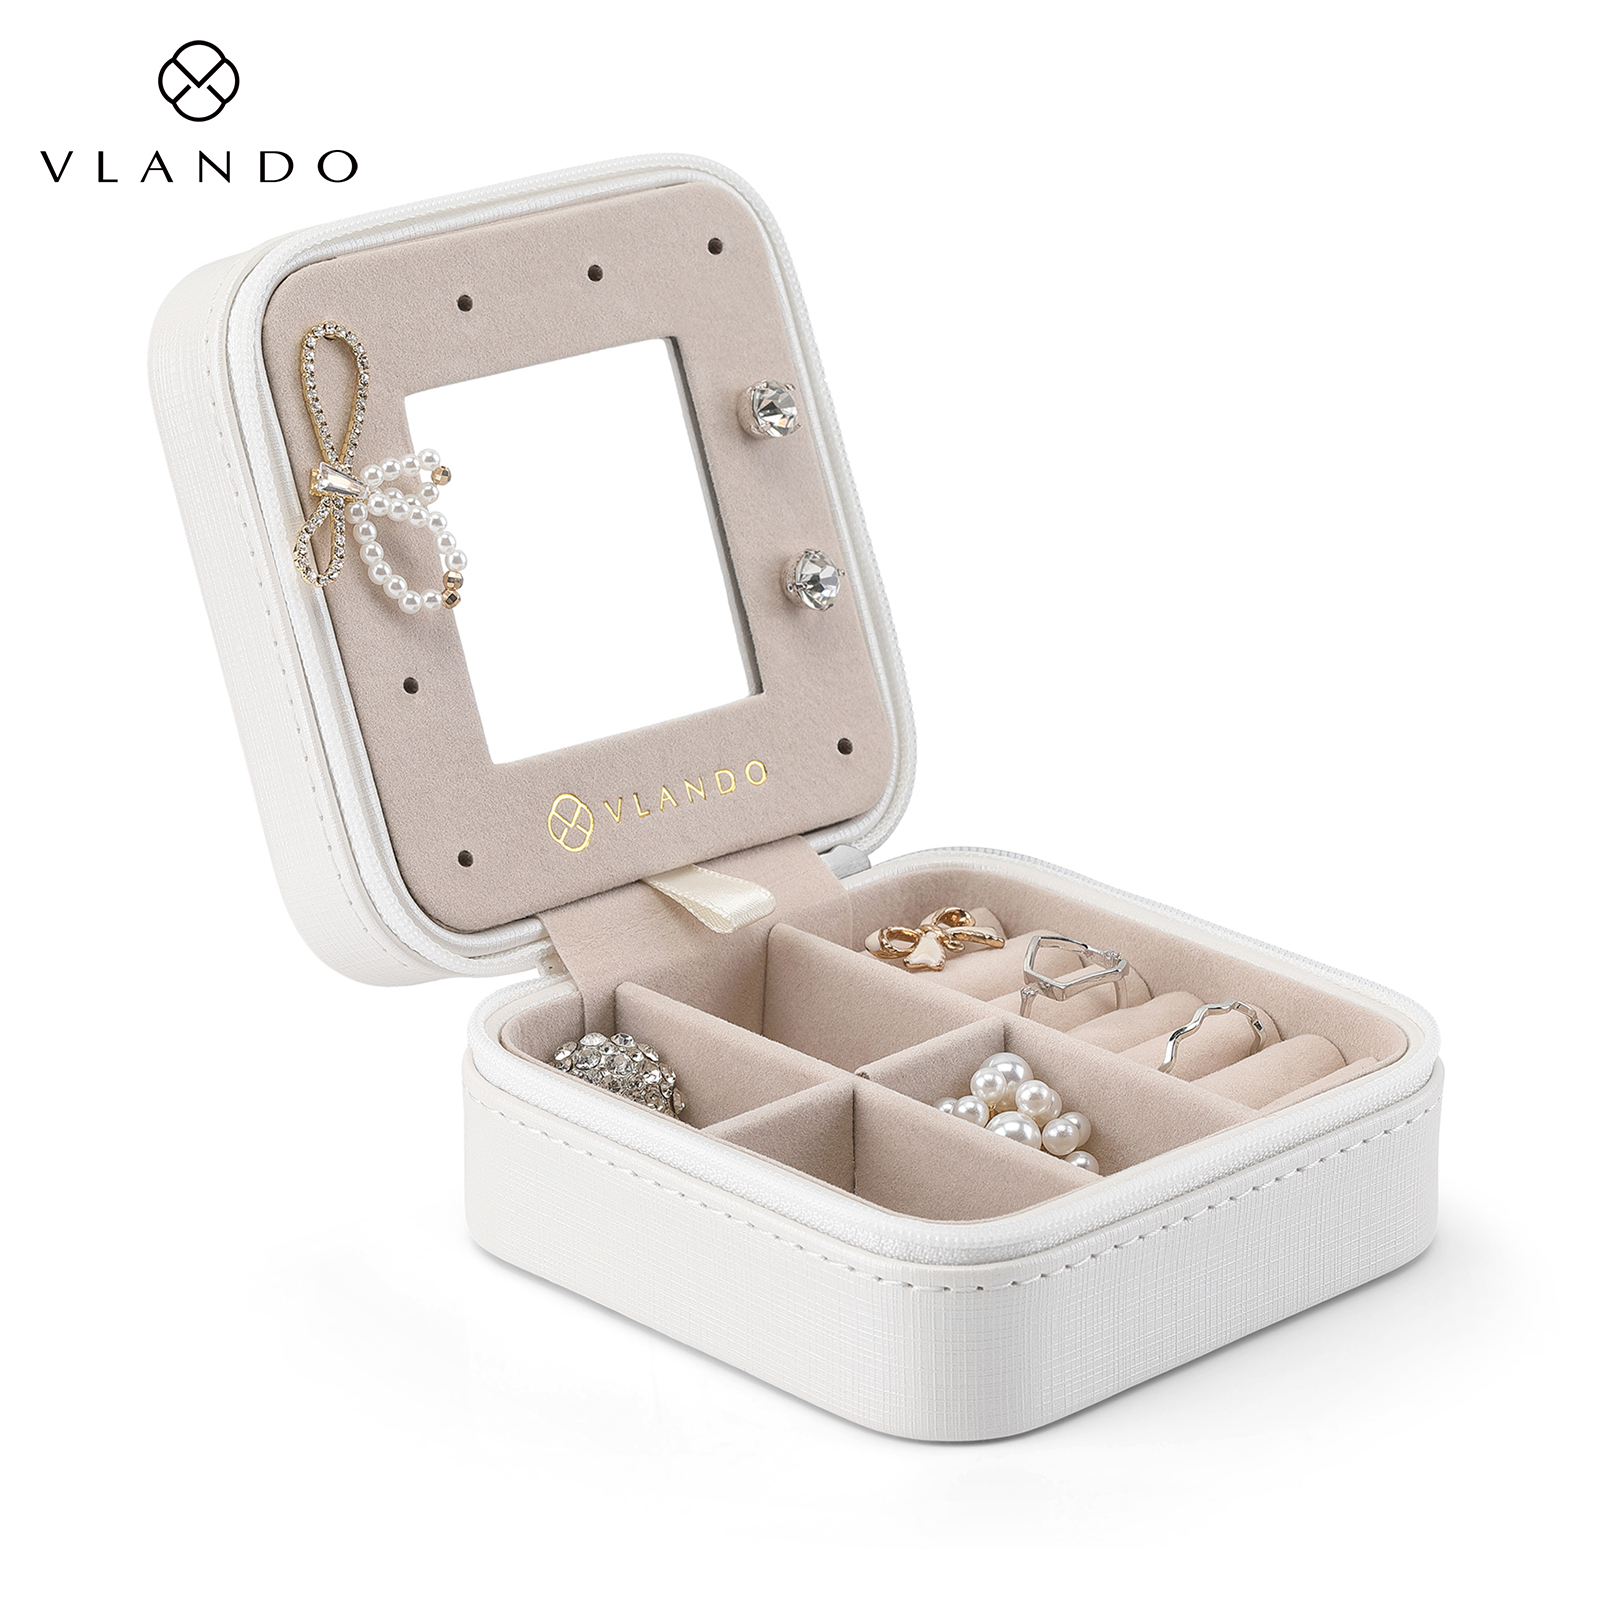 Macaron Portable Travel Jewelry Box | VLANDO 